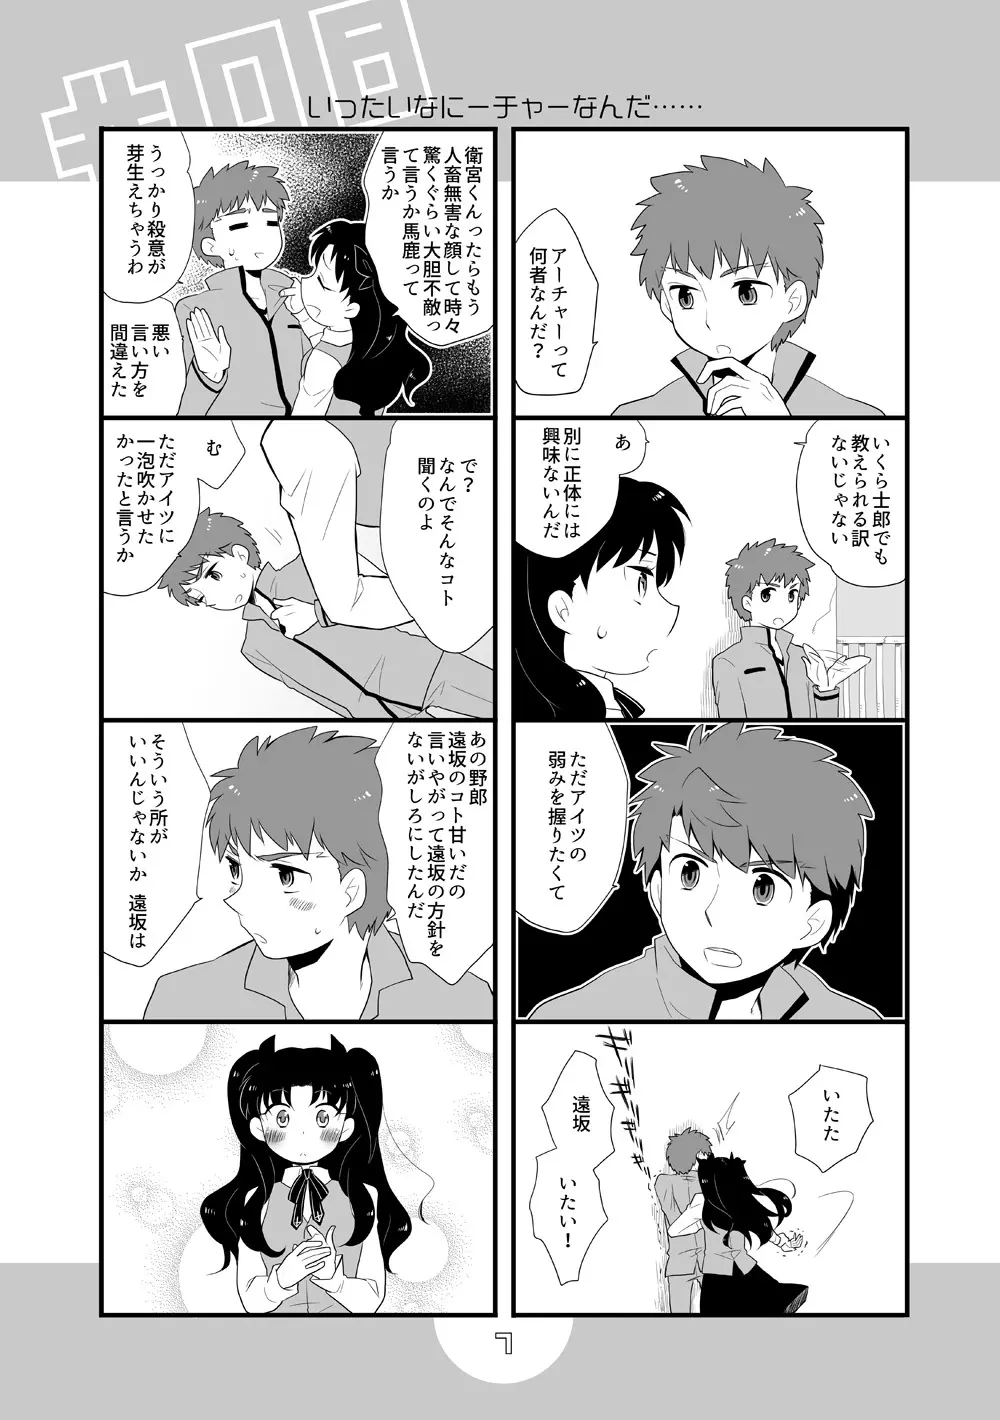 弓士本 - page62